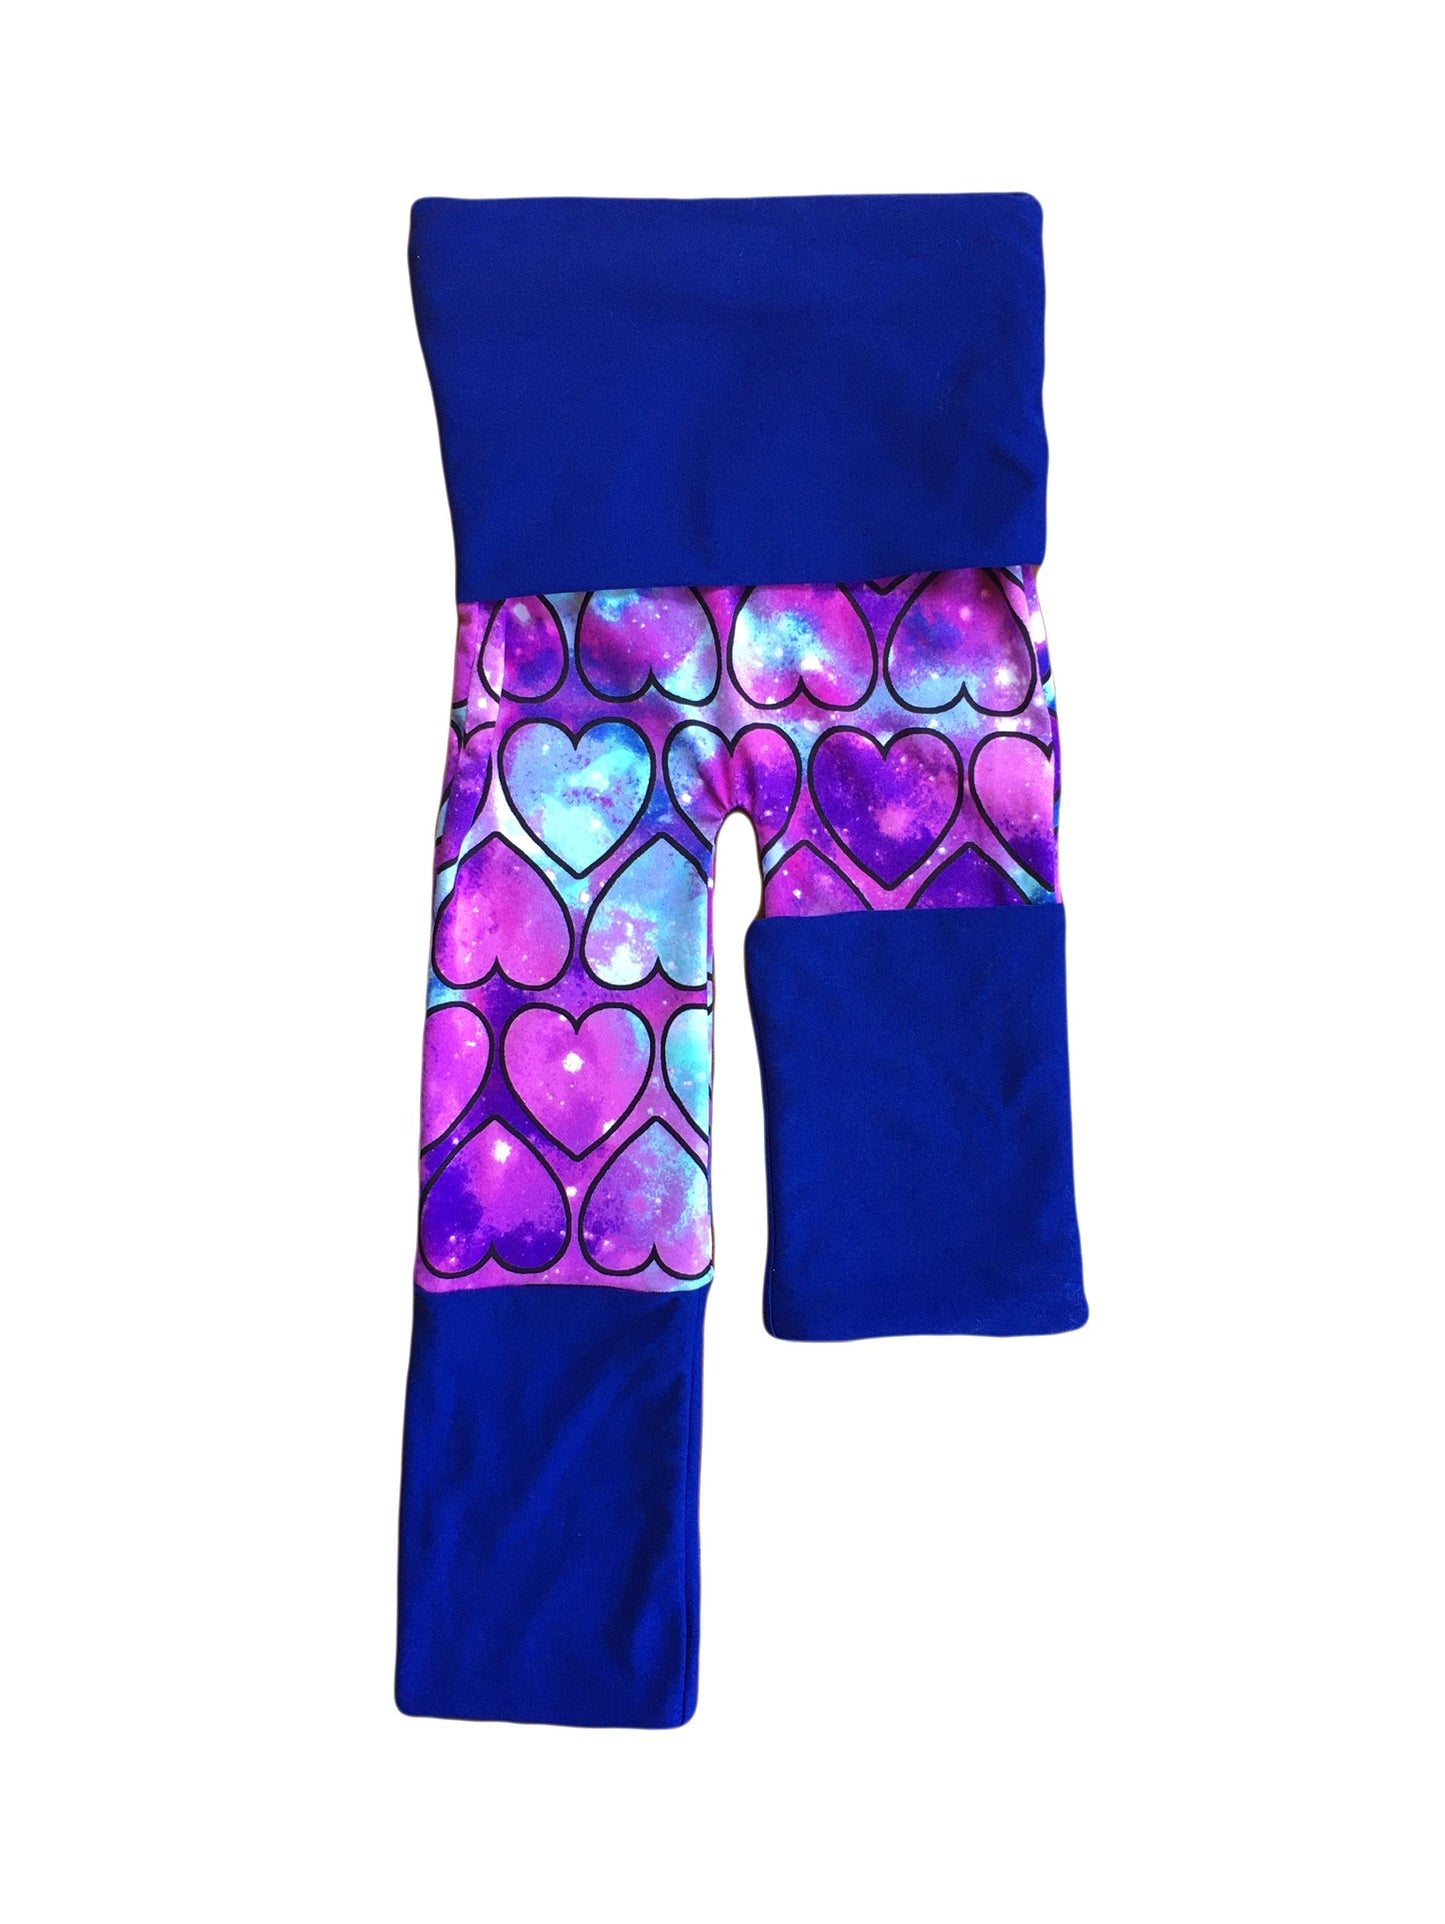 Adjustable Pants - Tie-Dye Hearts with Dark Blue